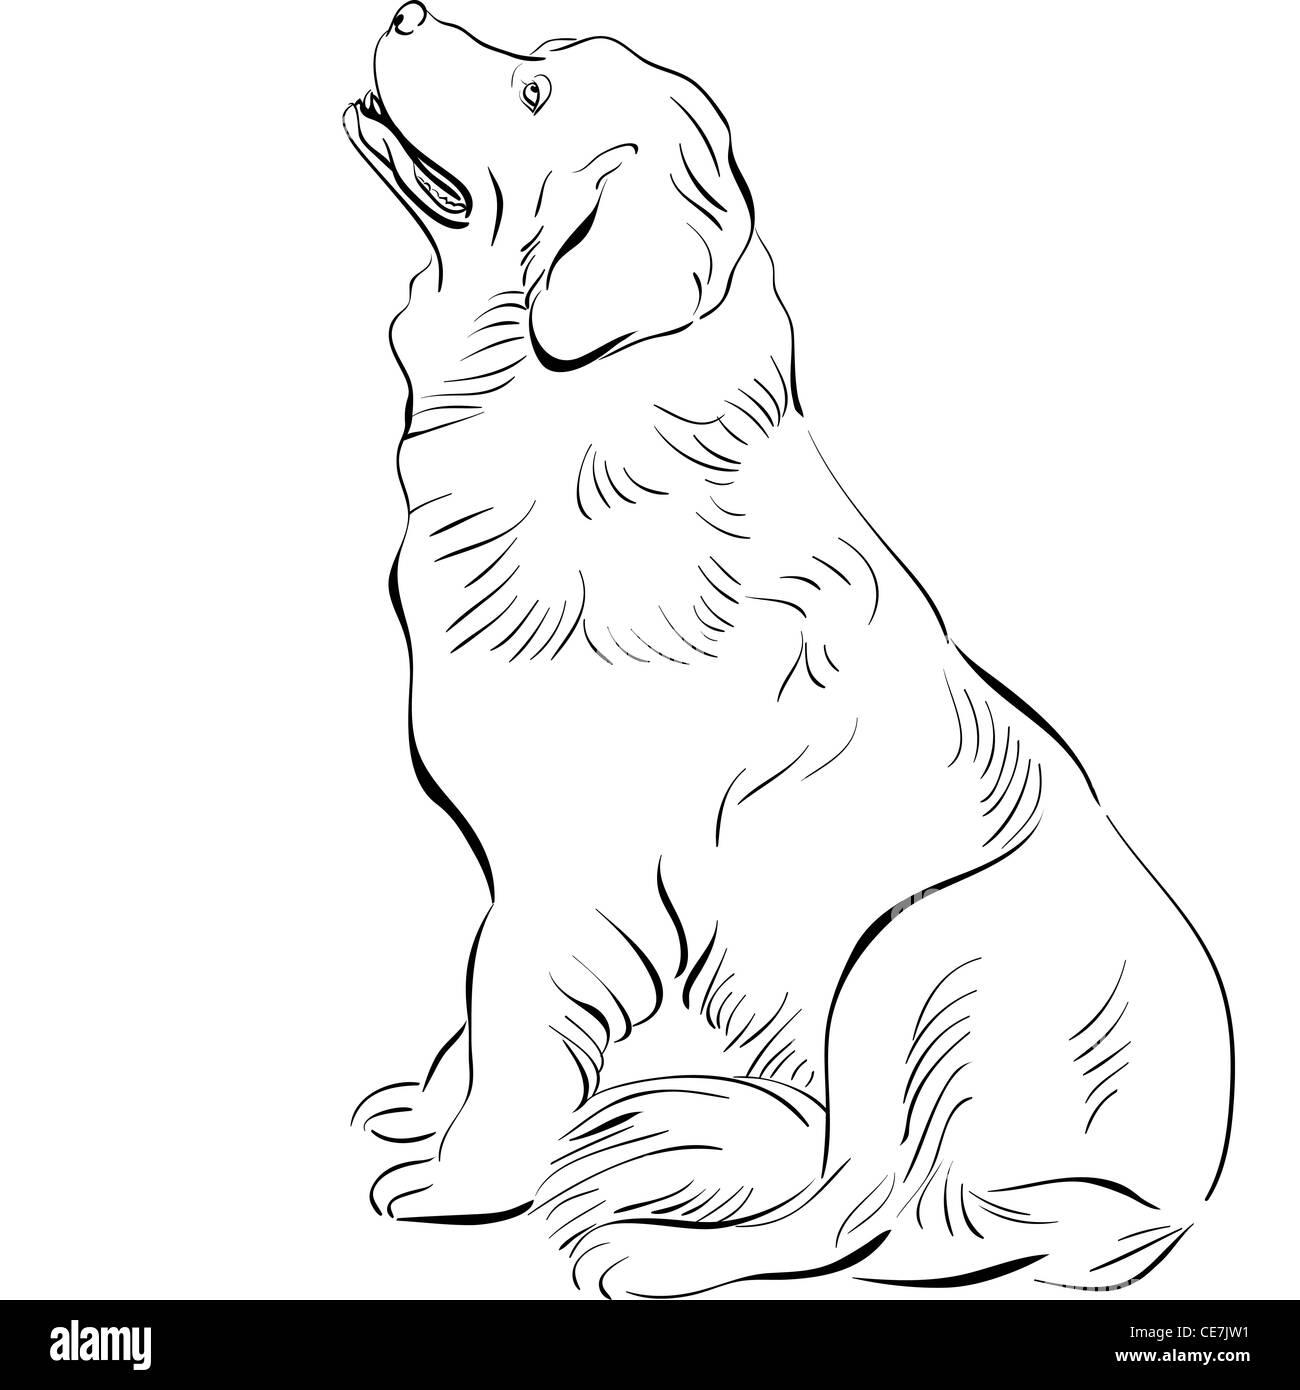 black and white sketch of the dog Newfoundland hound breed sitting Stock Photo